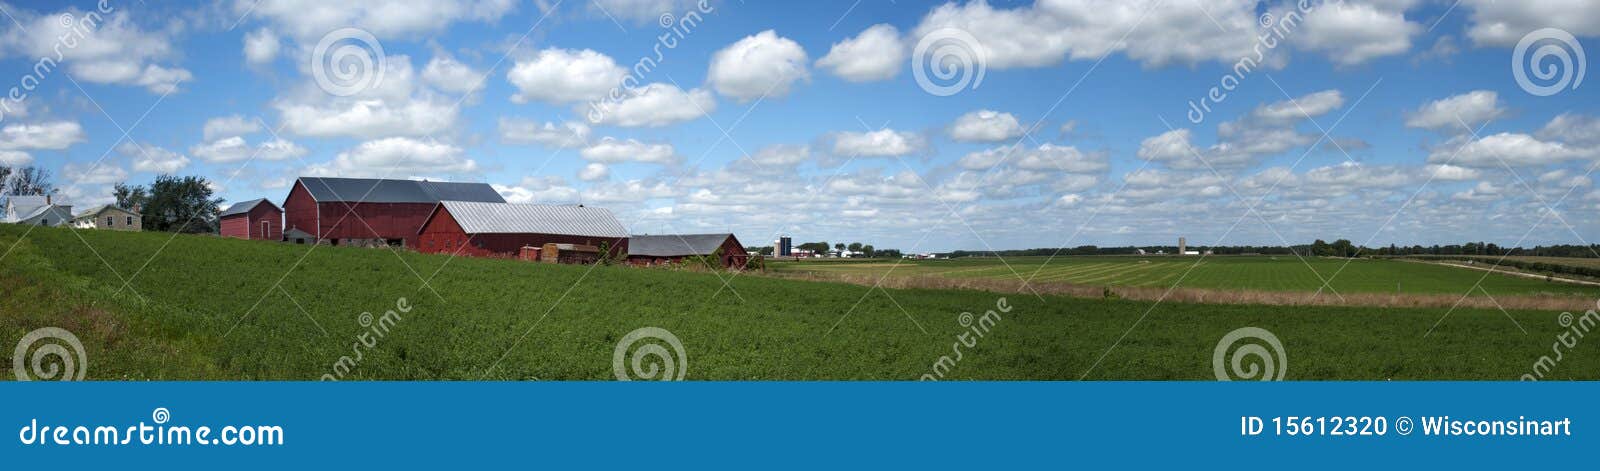 old dairy farm barn sky clounds panorama banner 15612320